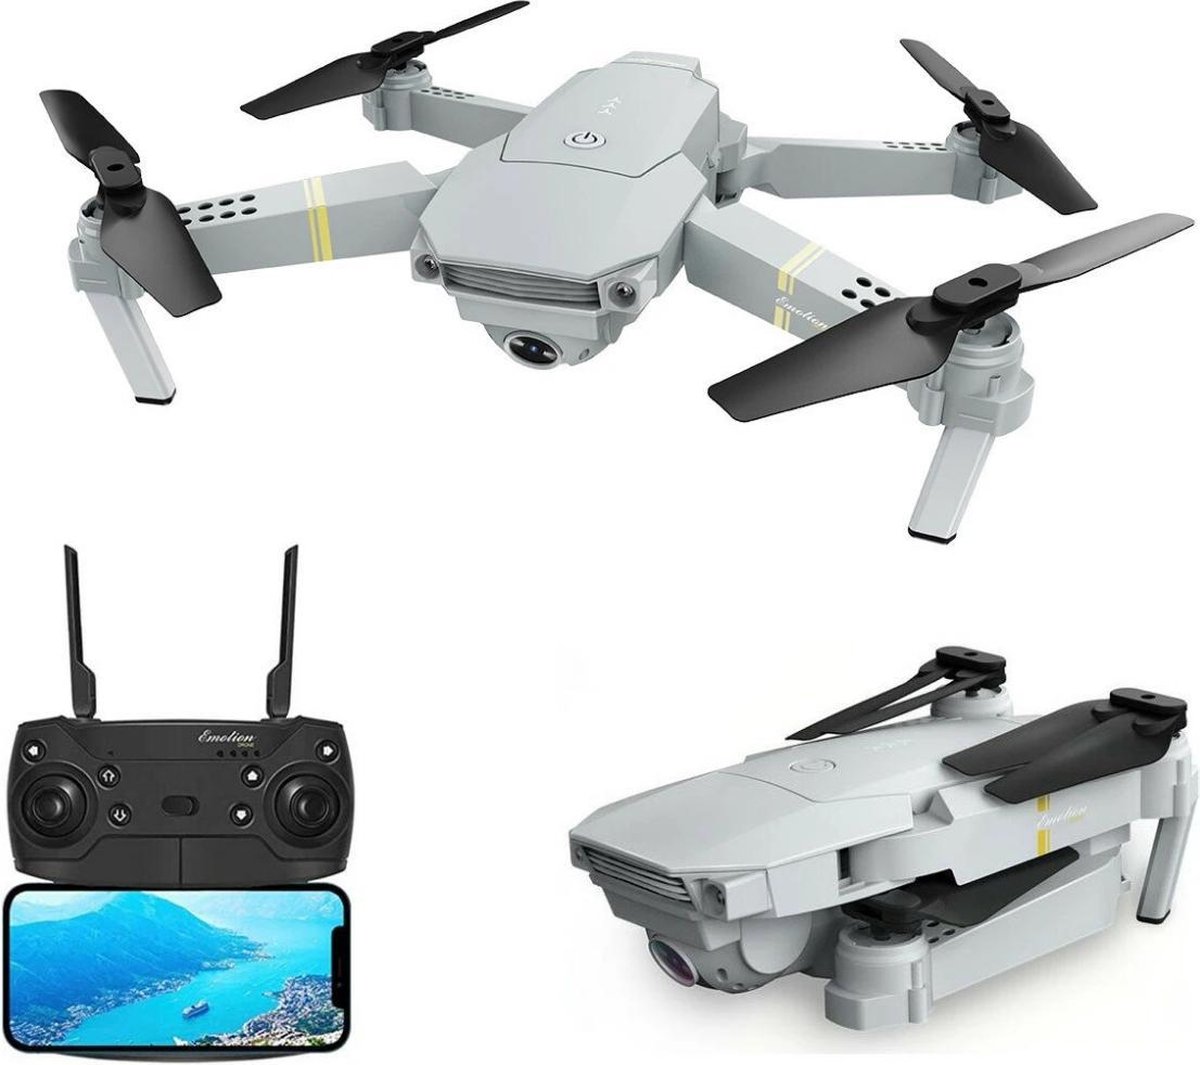 Trendtrading Mini Drone met Camera - 100m Bereik - HD Live-View via App | Zilver